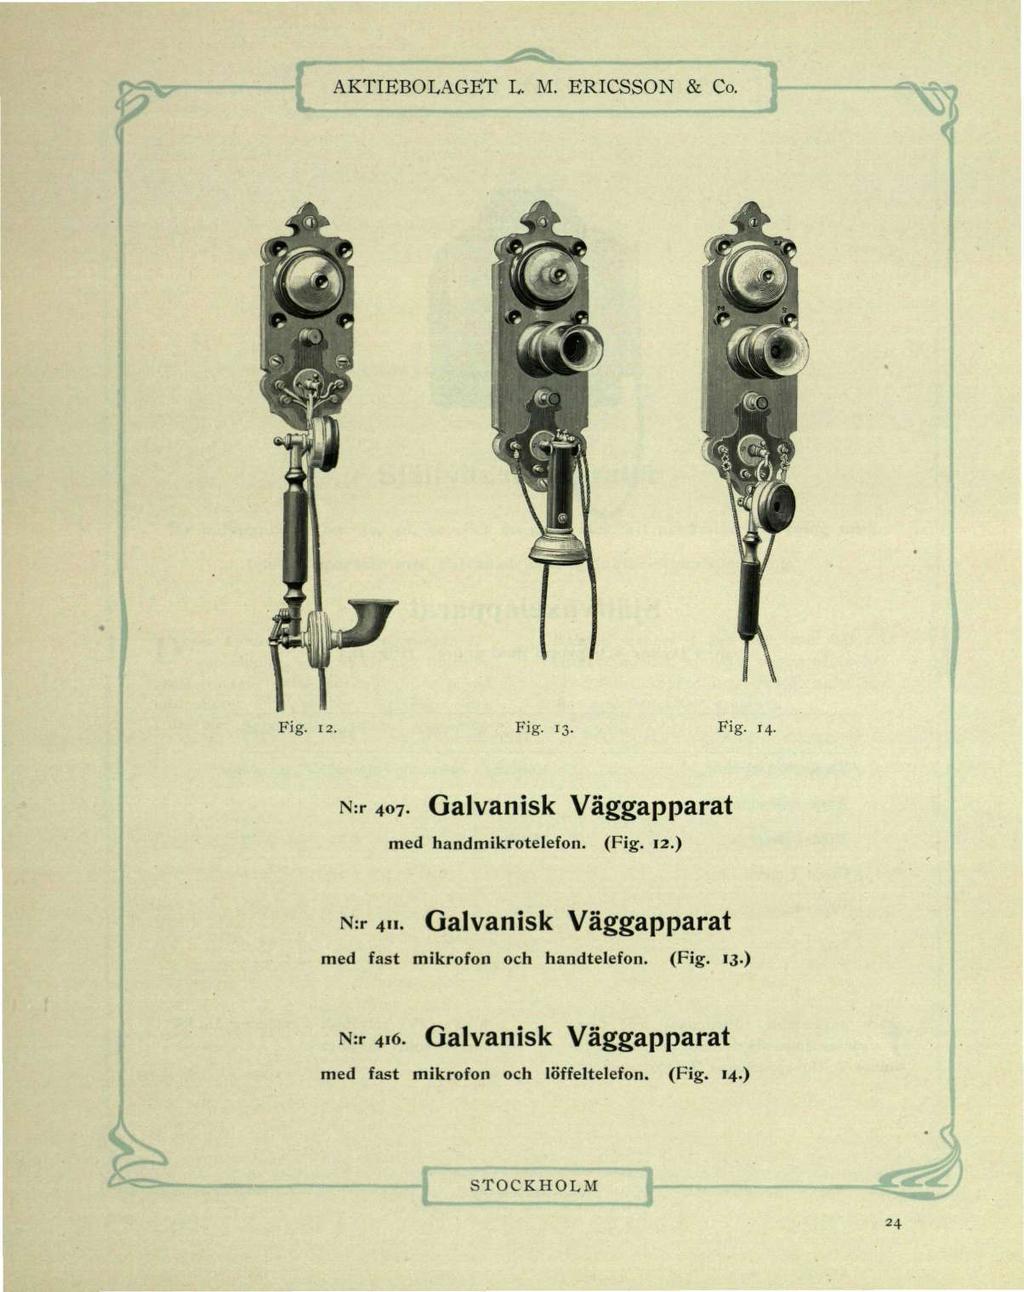 Fig. 12. Fig- 13- Fig. 14. N:r 407. Galvanisk Väggapparat med handmikrotelefon. (Fig. 12.) N:r 411.